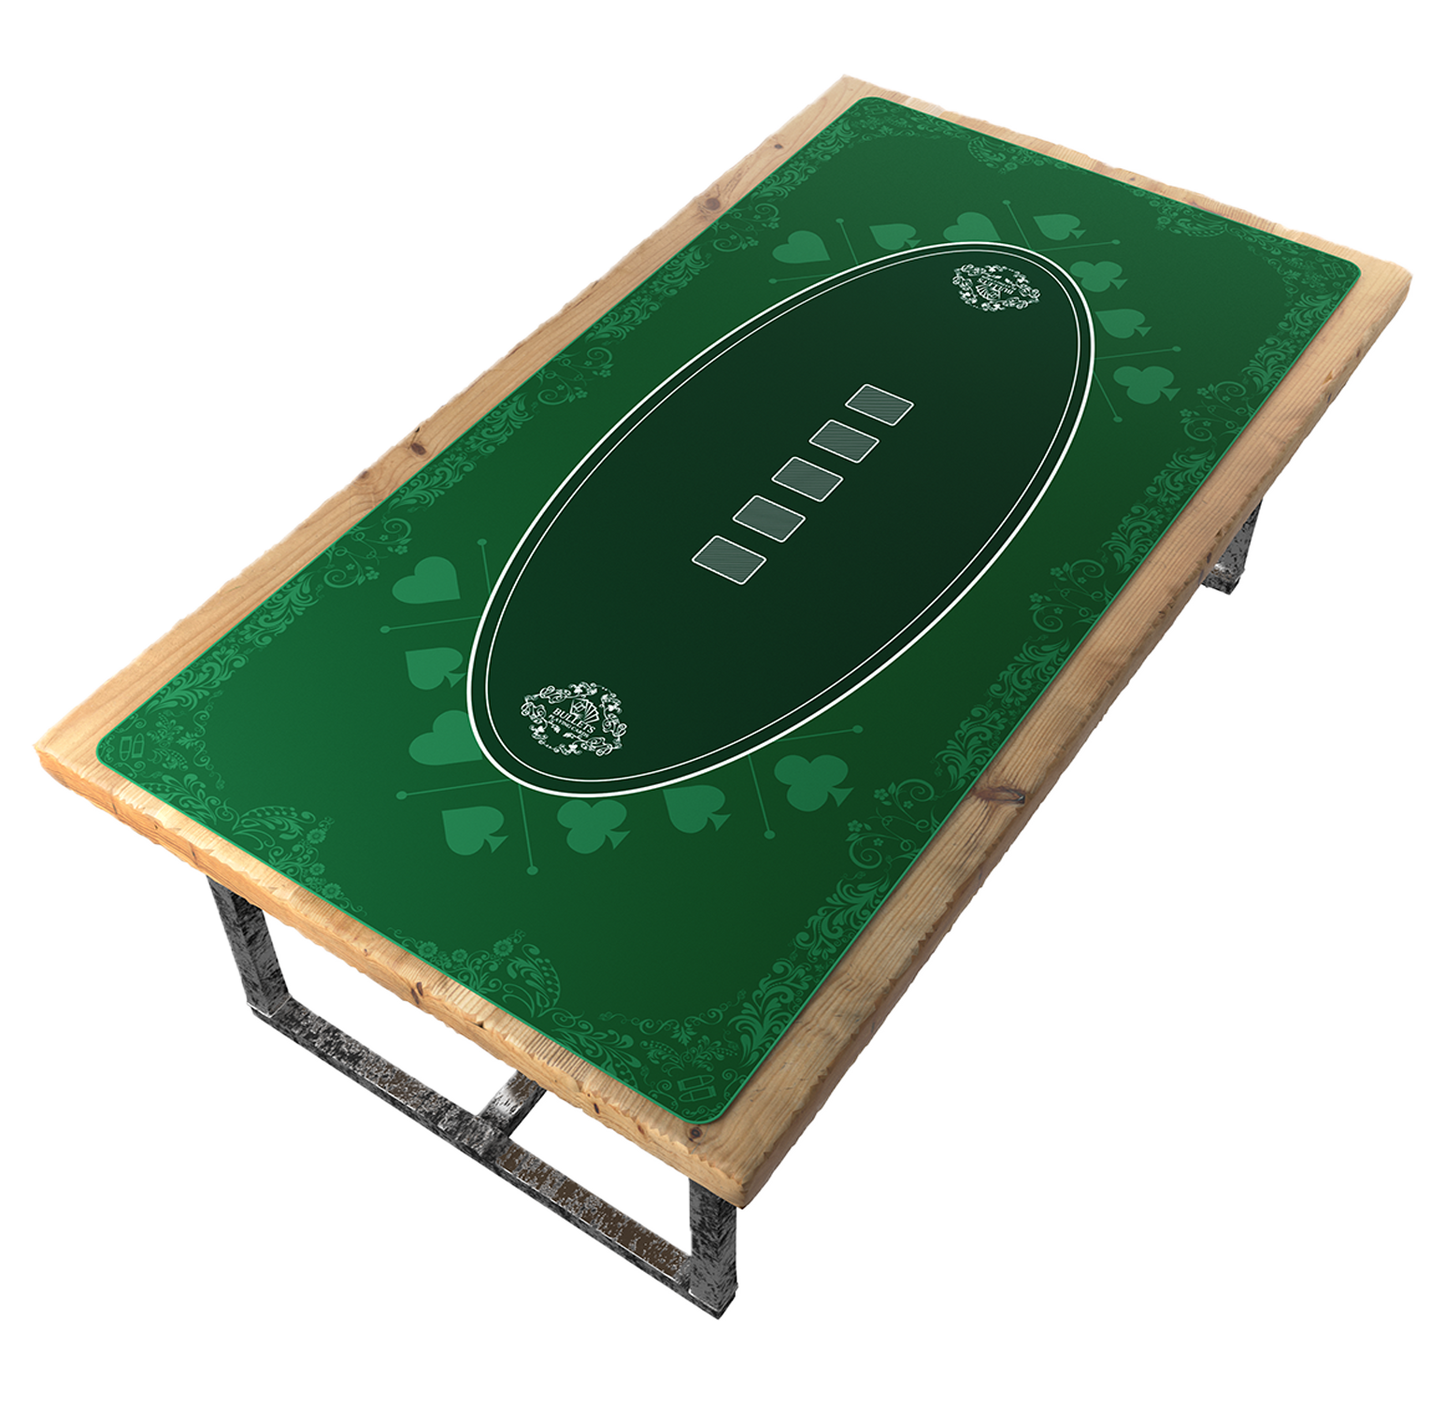 Poker mat 200 x 100cm, square - casino design